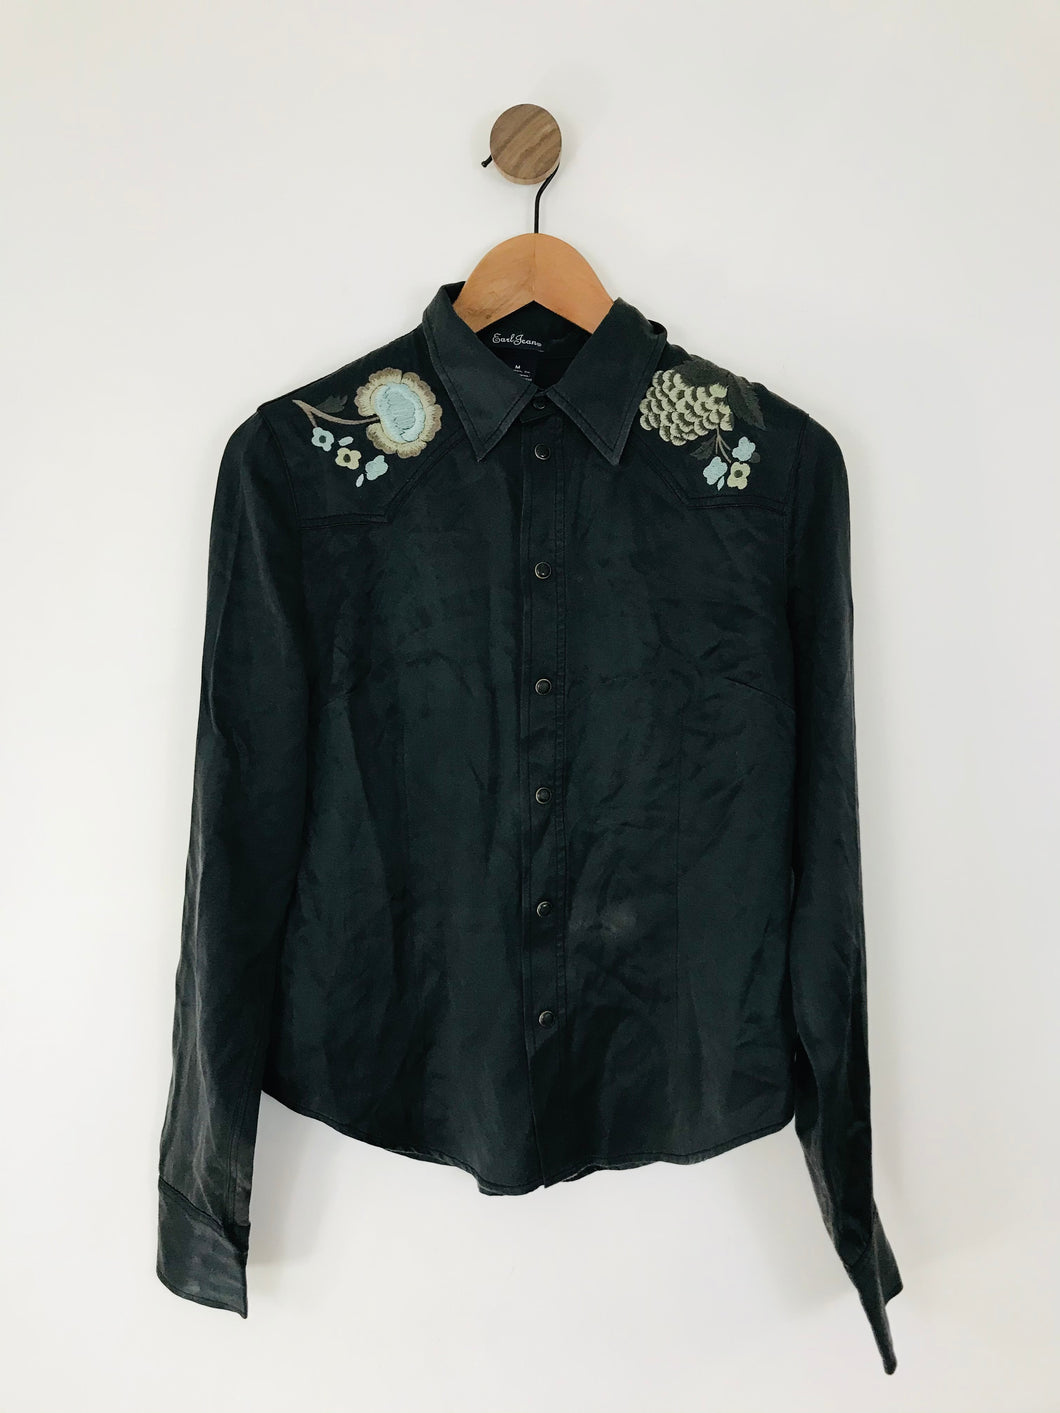 Earl Jean Women’s Silk Embroidered Shirt | M UK10-12 | Black